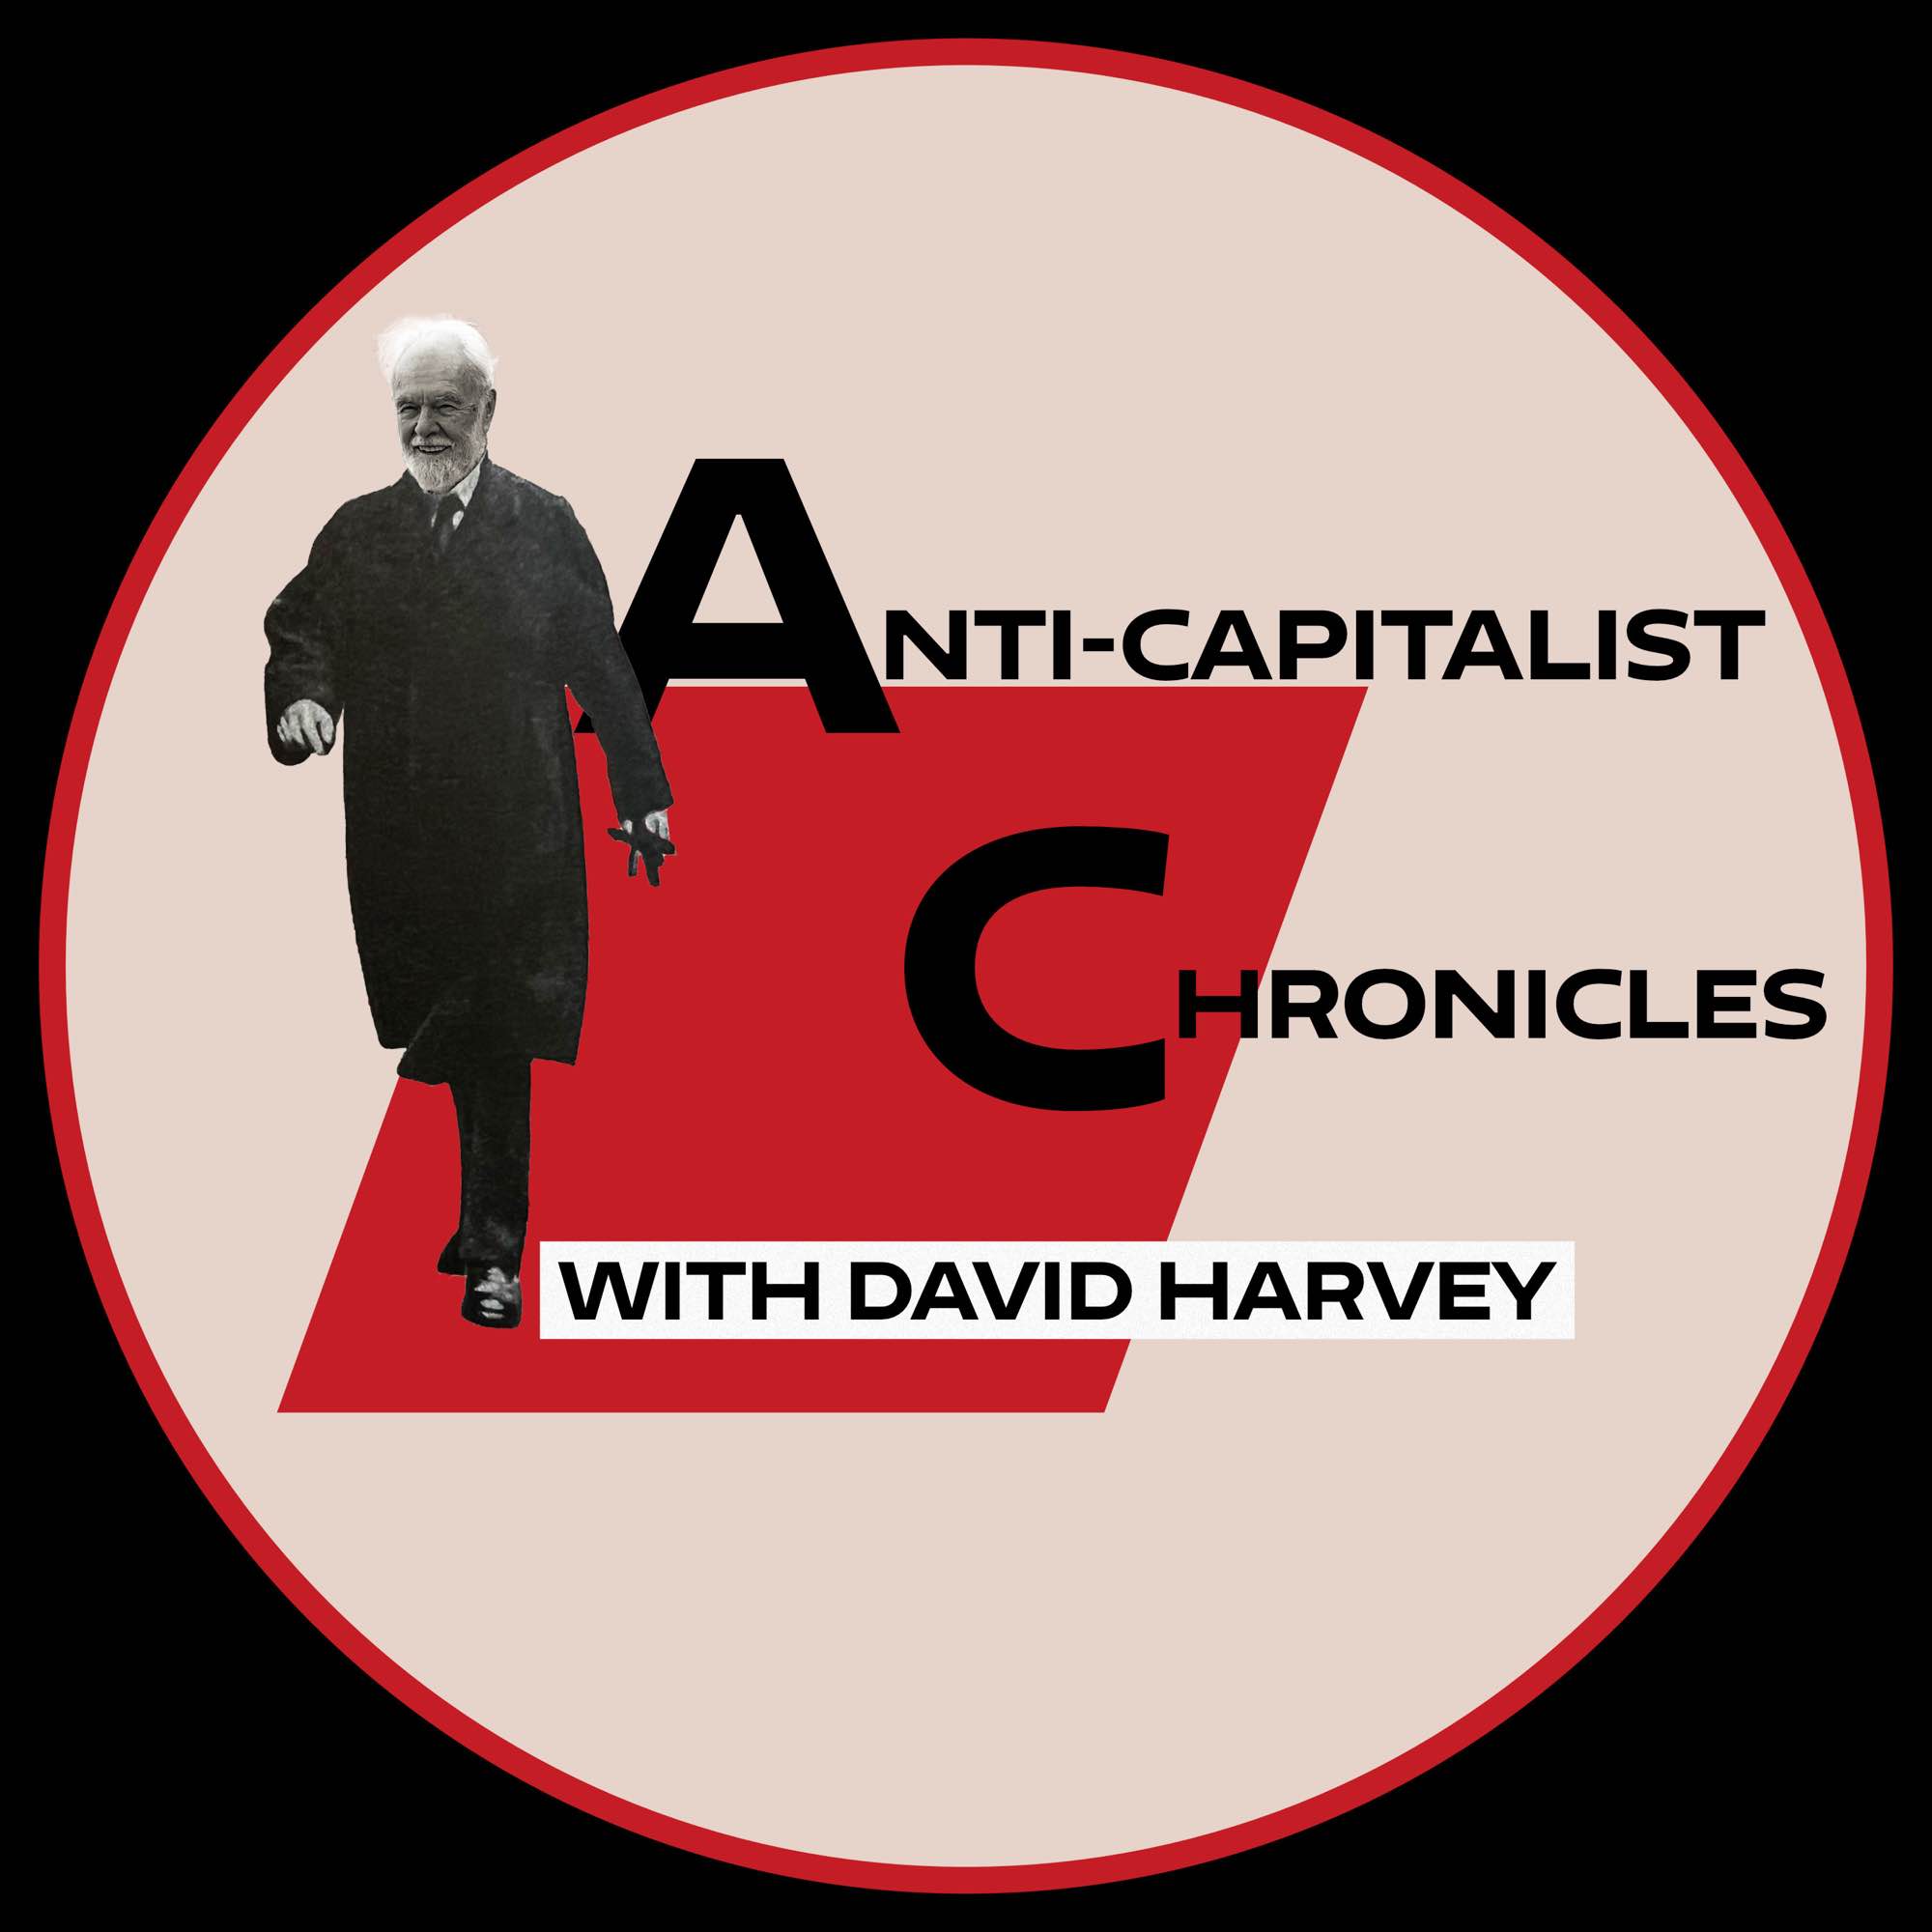 Show artwork for David Harvey's Anti-Capitalist Chronicles